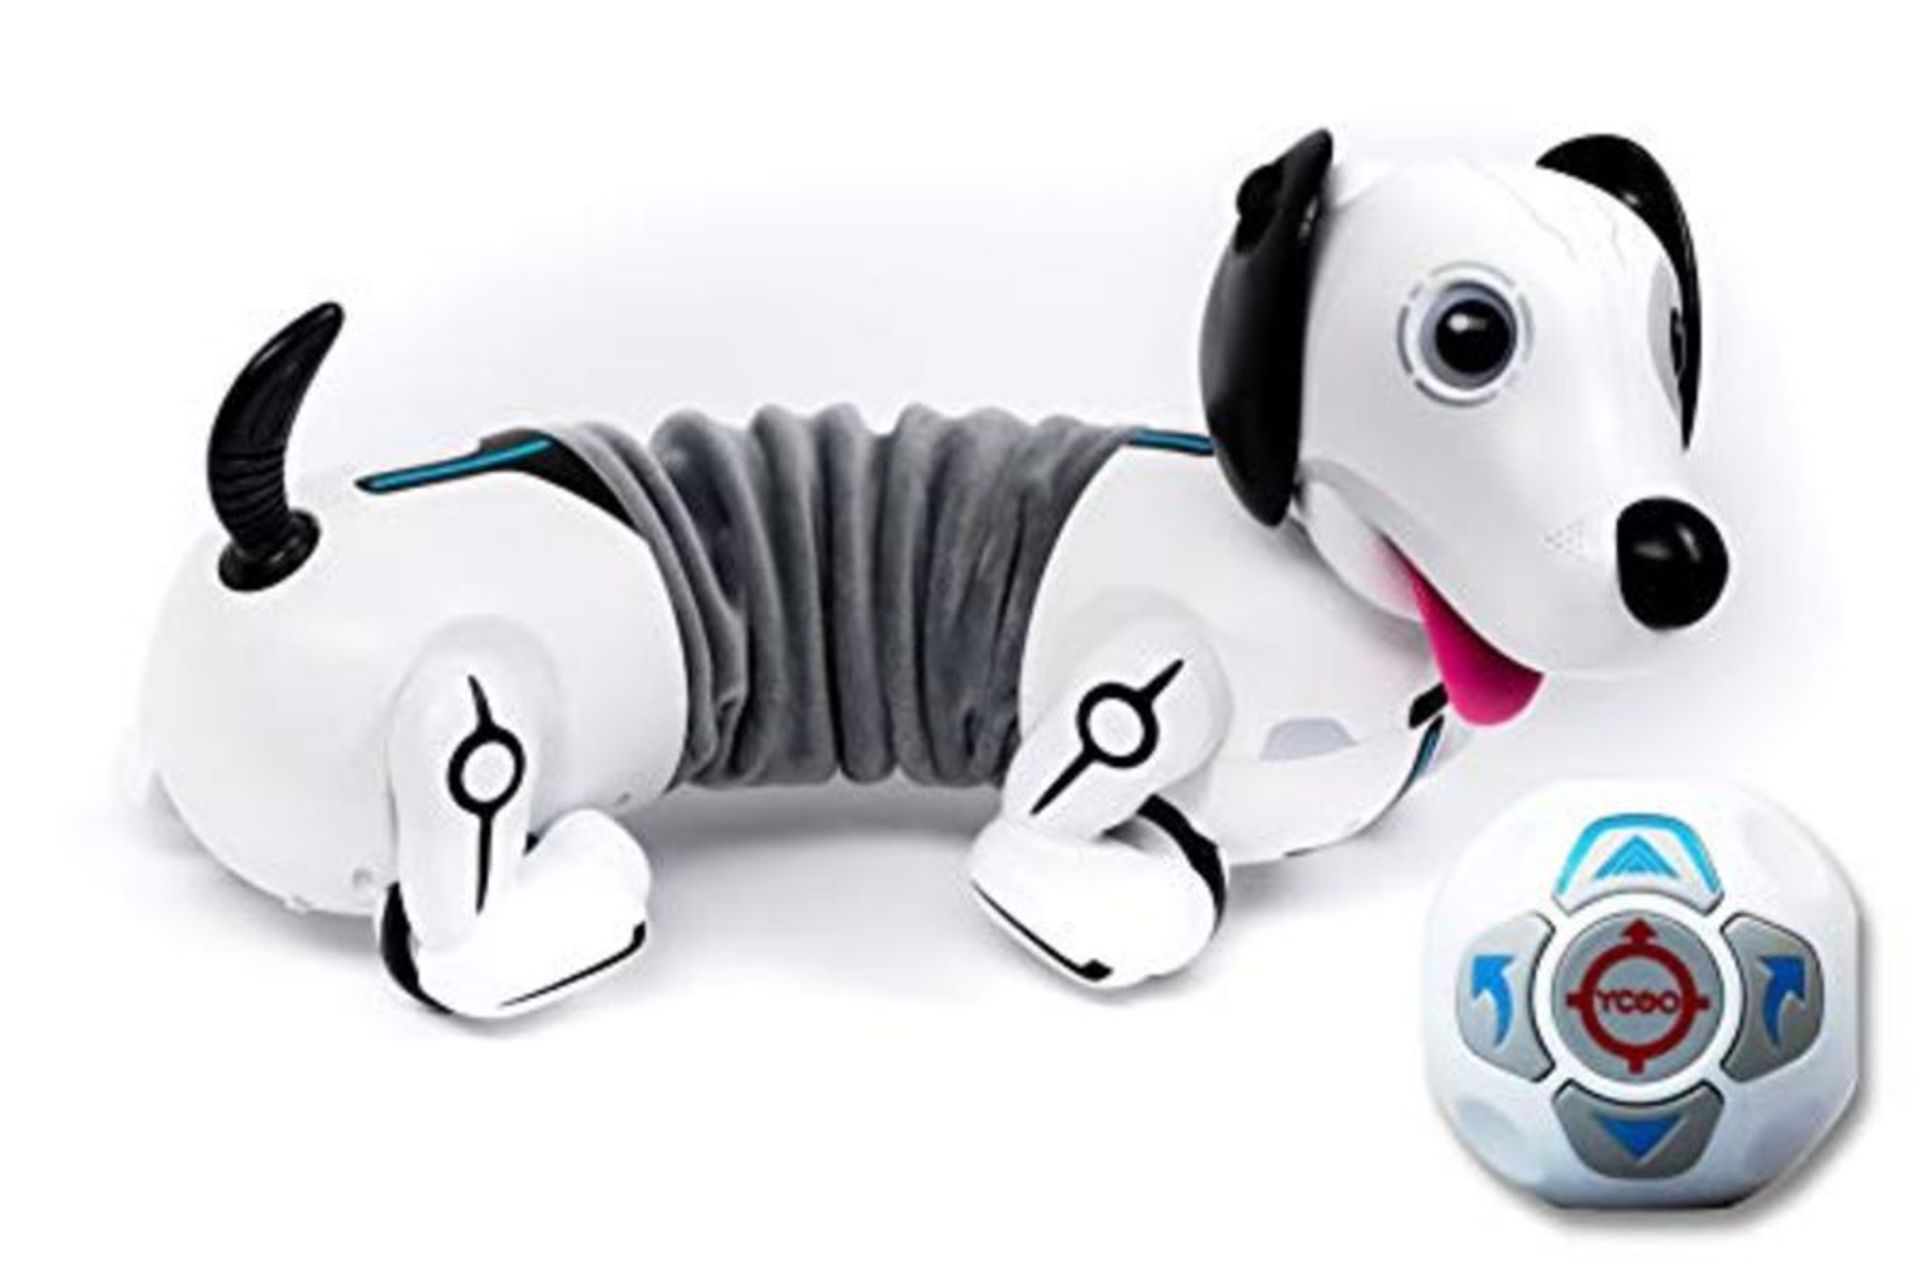 SilverLit 88570 Robo Dash/Dackel, Remote Control Dog for Kids, White